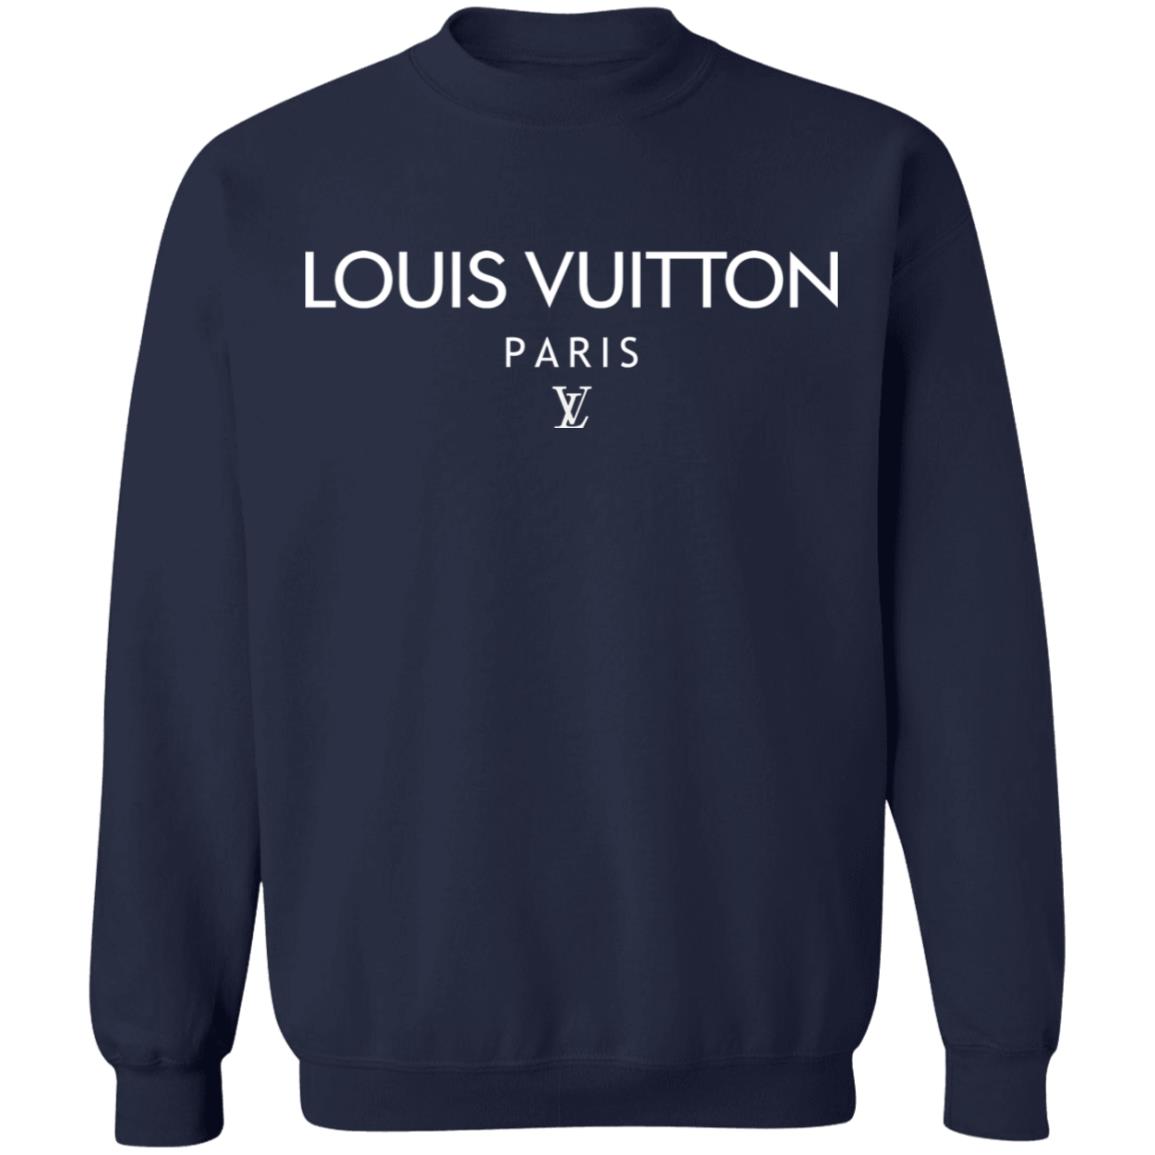 Louis Vuitton Paris shirt - Rockatee